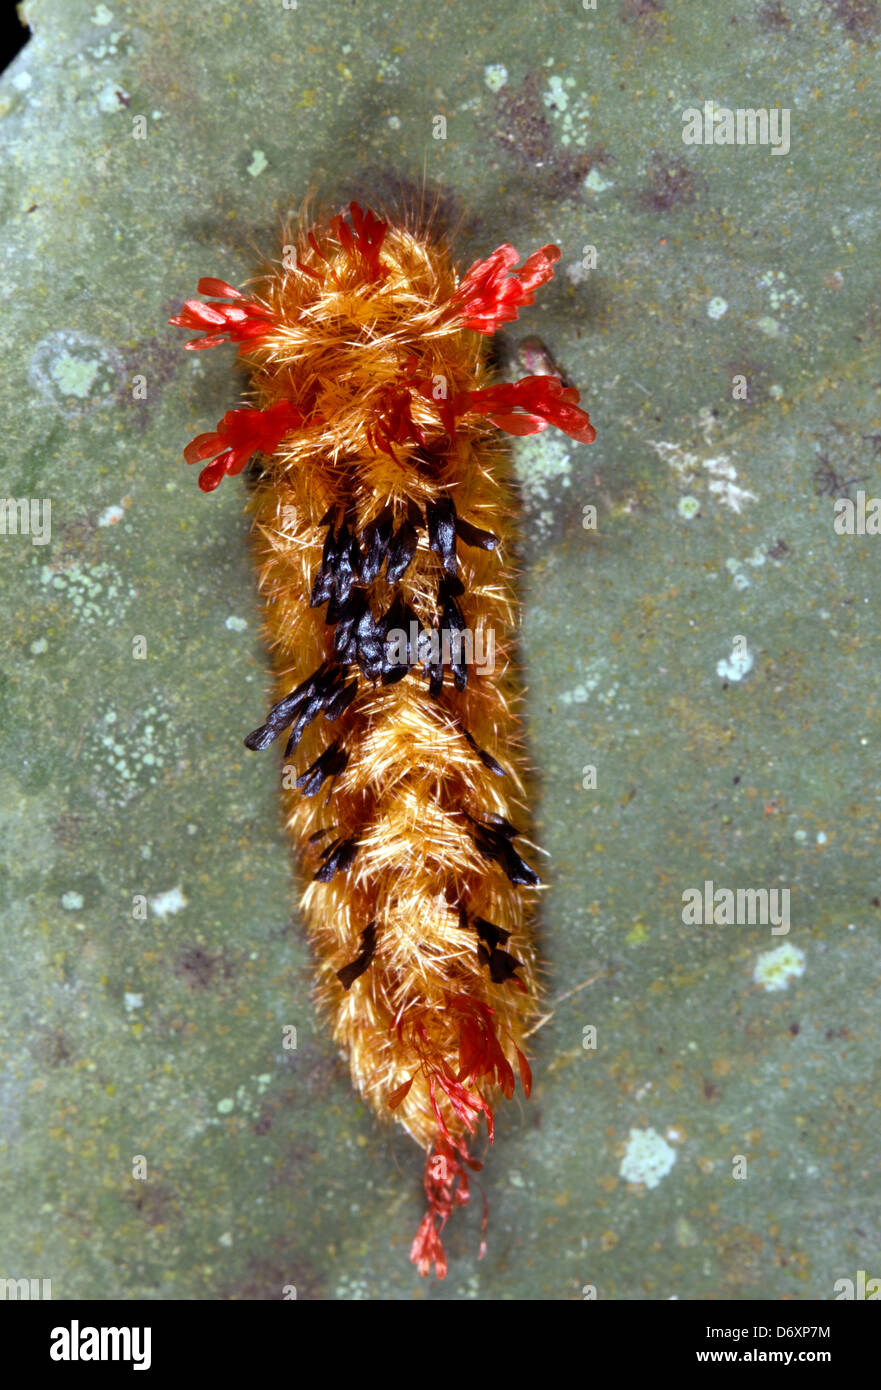 An unusual scaly slug caterpillar from the Ecuadorian Amazon Stock Photo